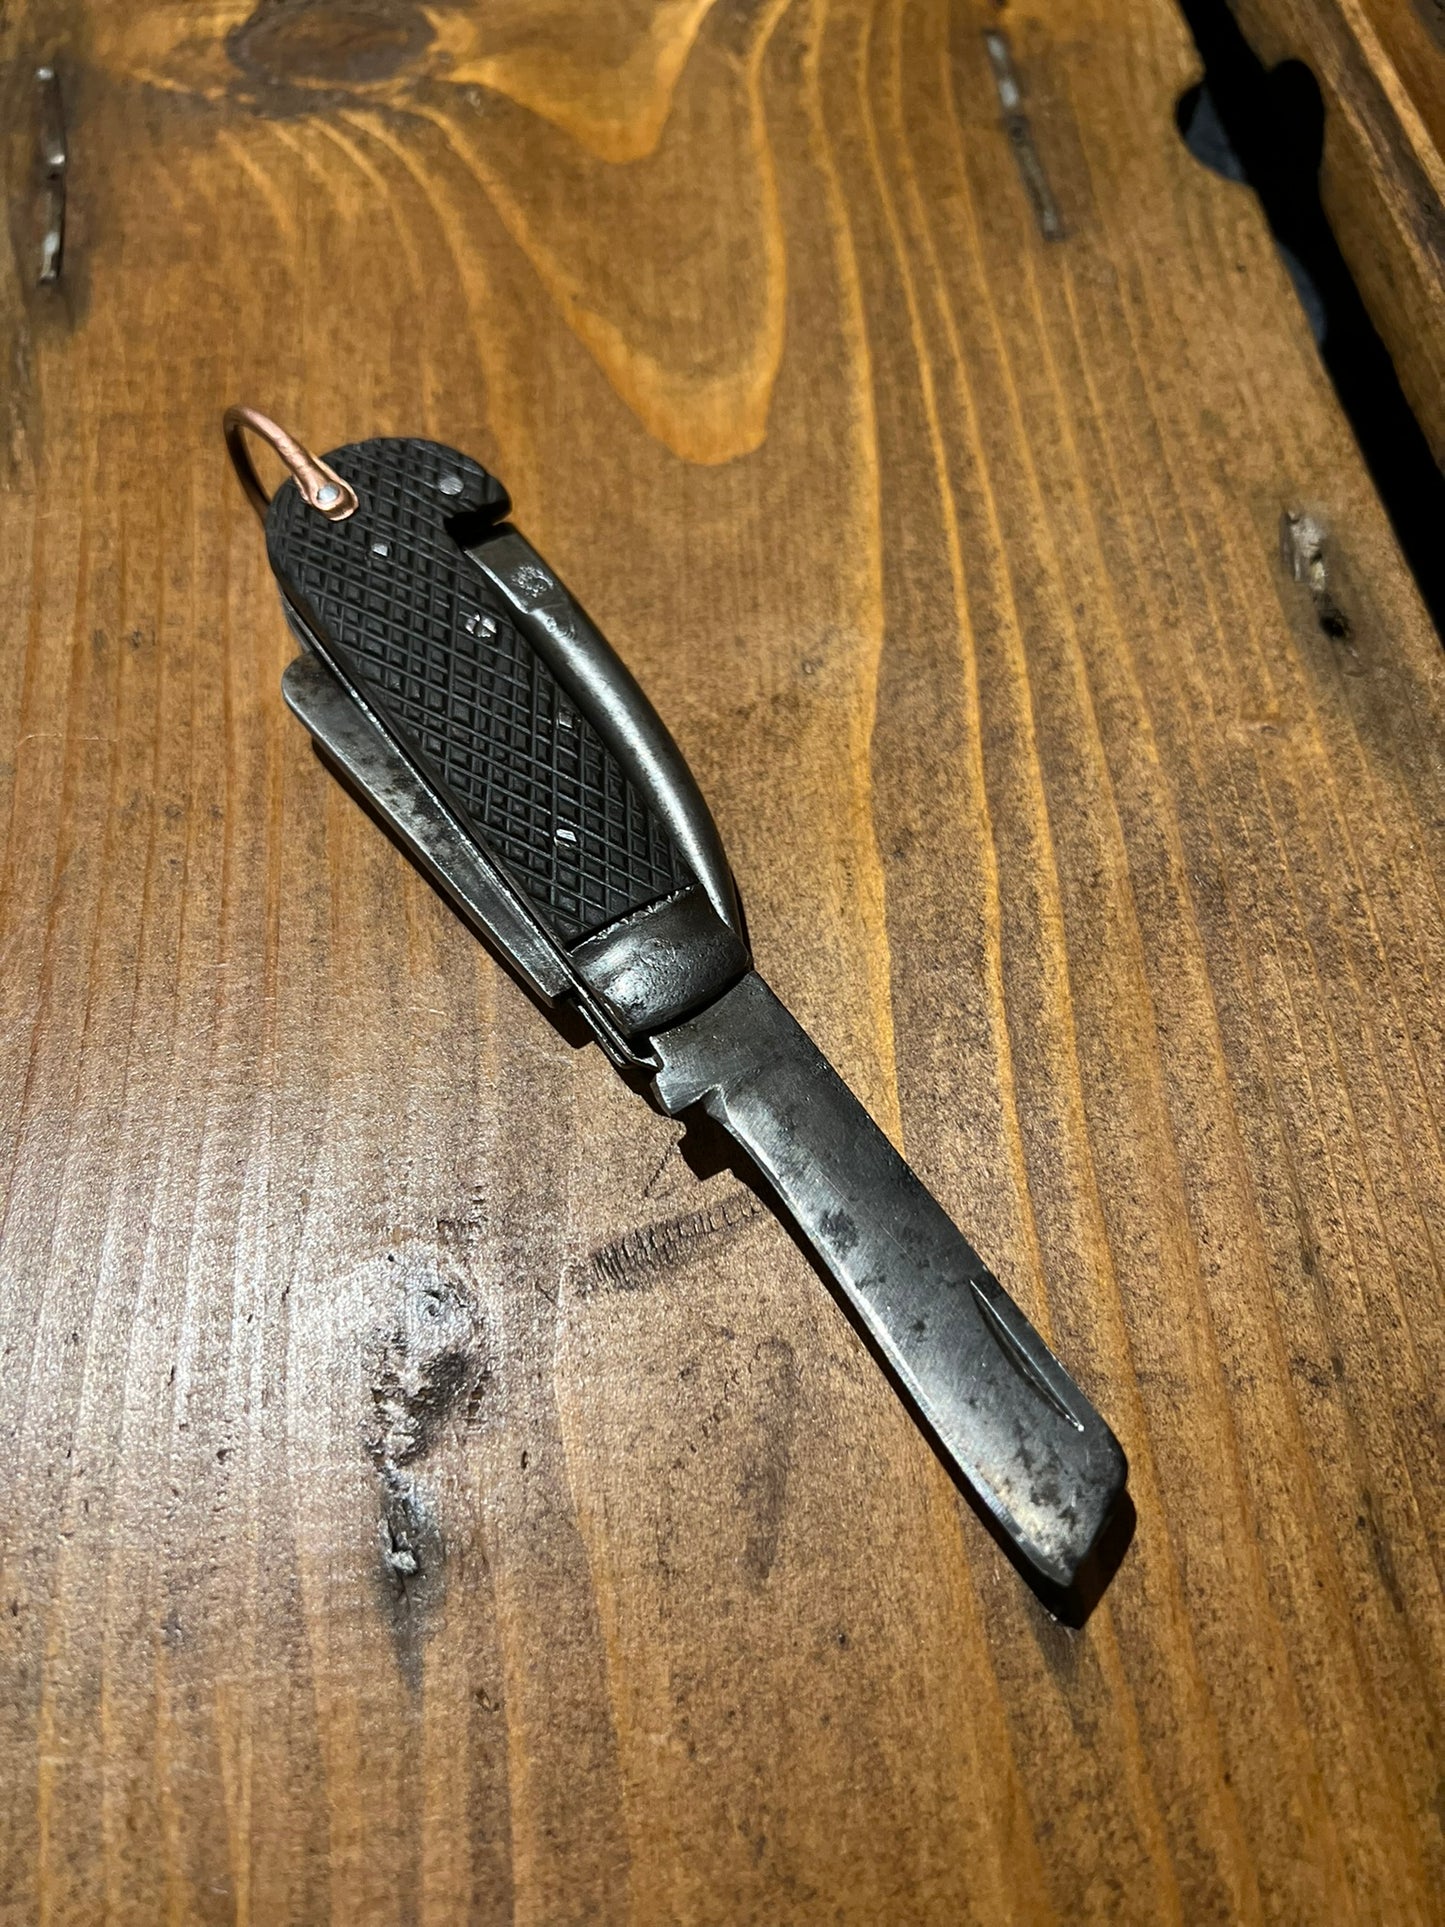 Vintage WW2 Army Jack Knife Clasp Knife Military Survival Pen Knife